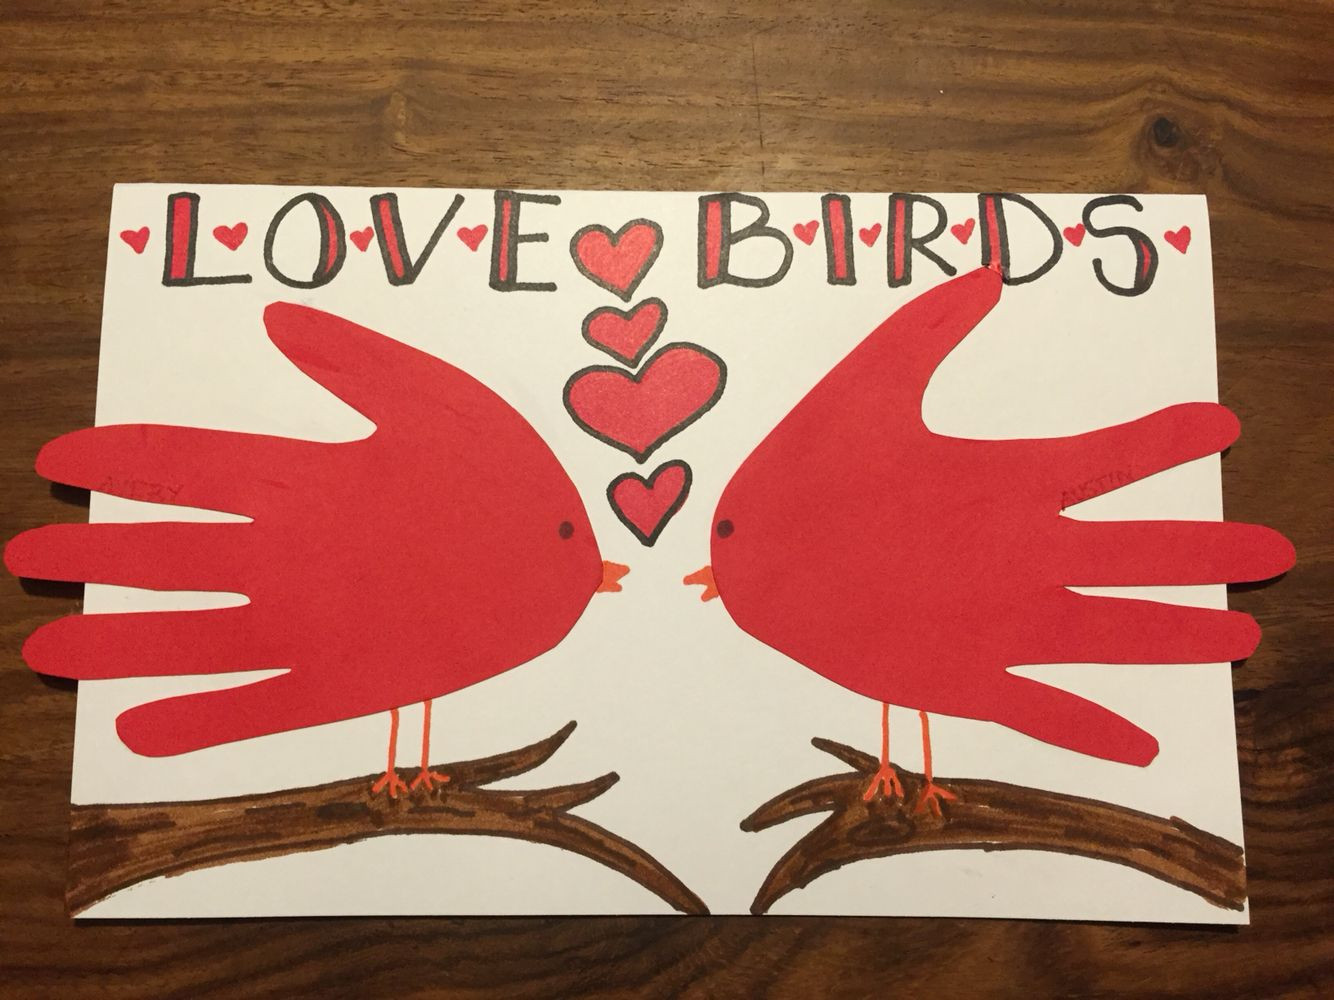 20Th Anniversary Gift Ideas For Parents
 Lovebirds handprint birds Valentine s Day or anniversary